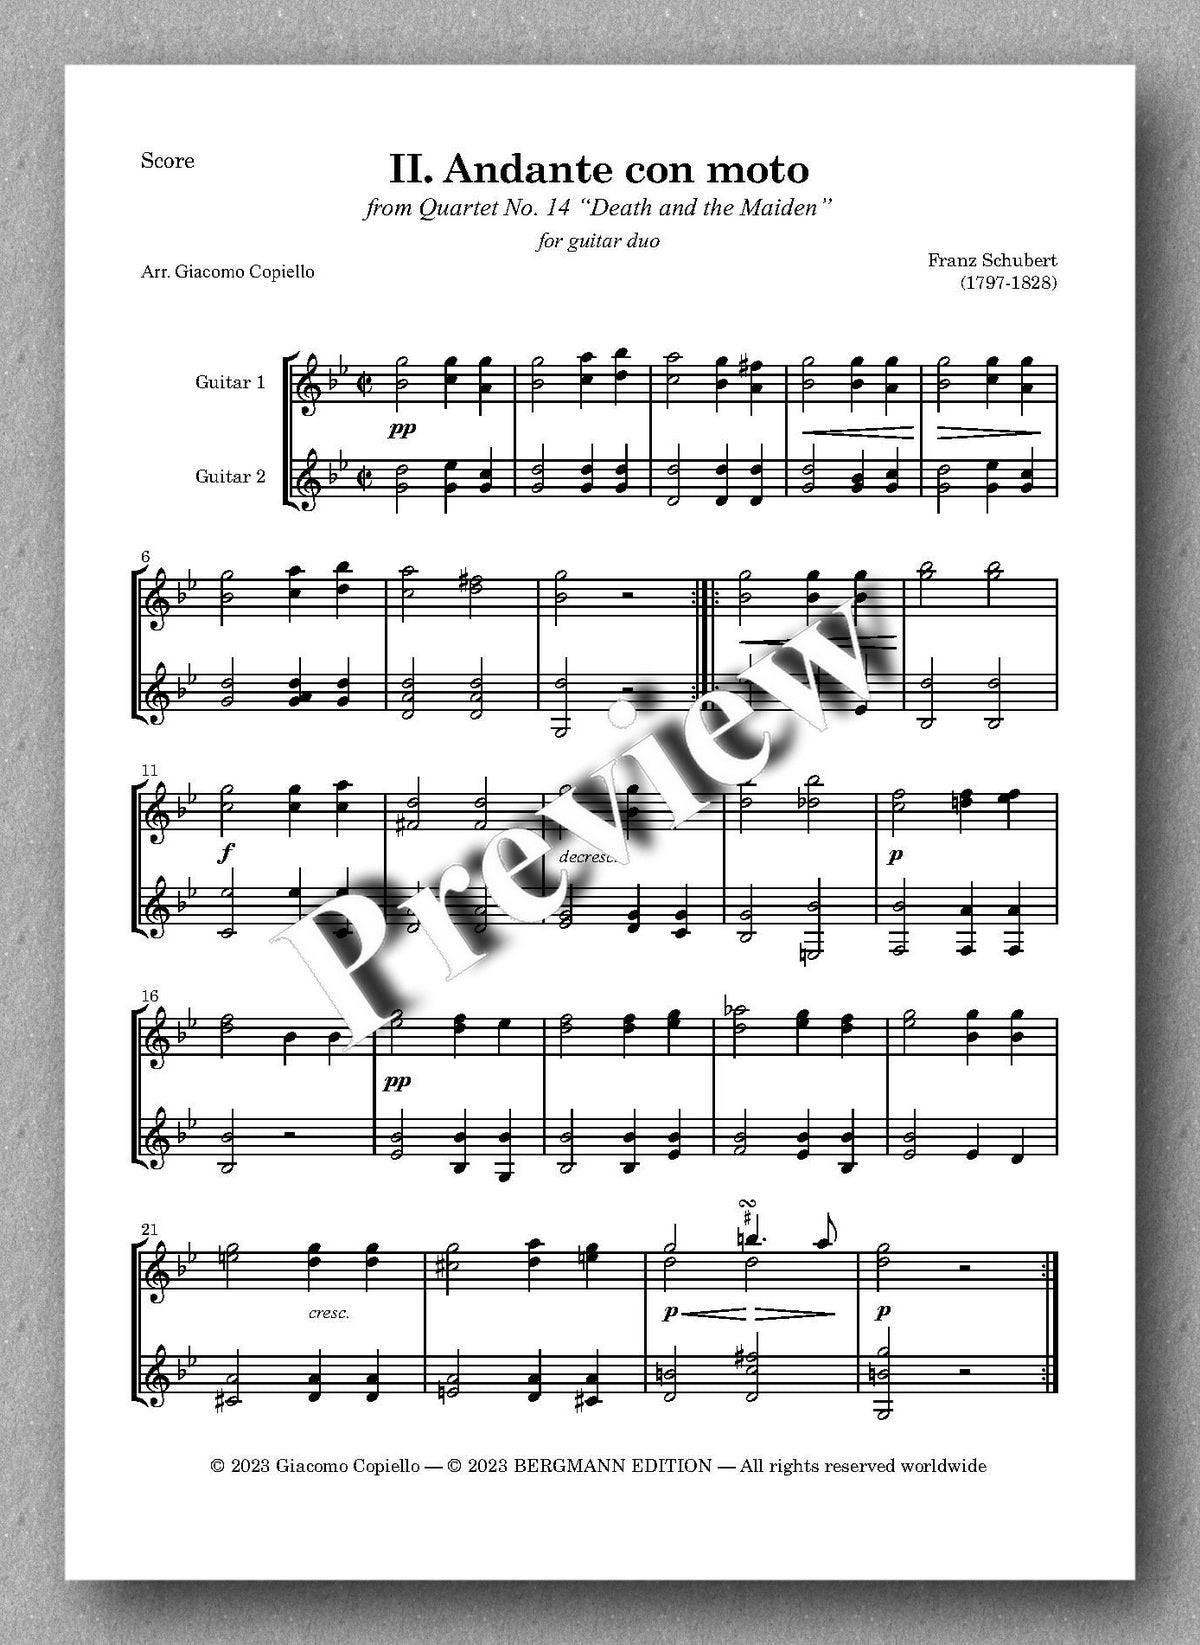 Lieder vol. 3, by Franz Schubert  - preview of the music score 1